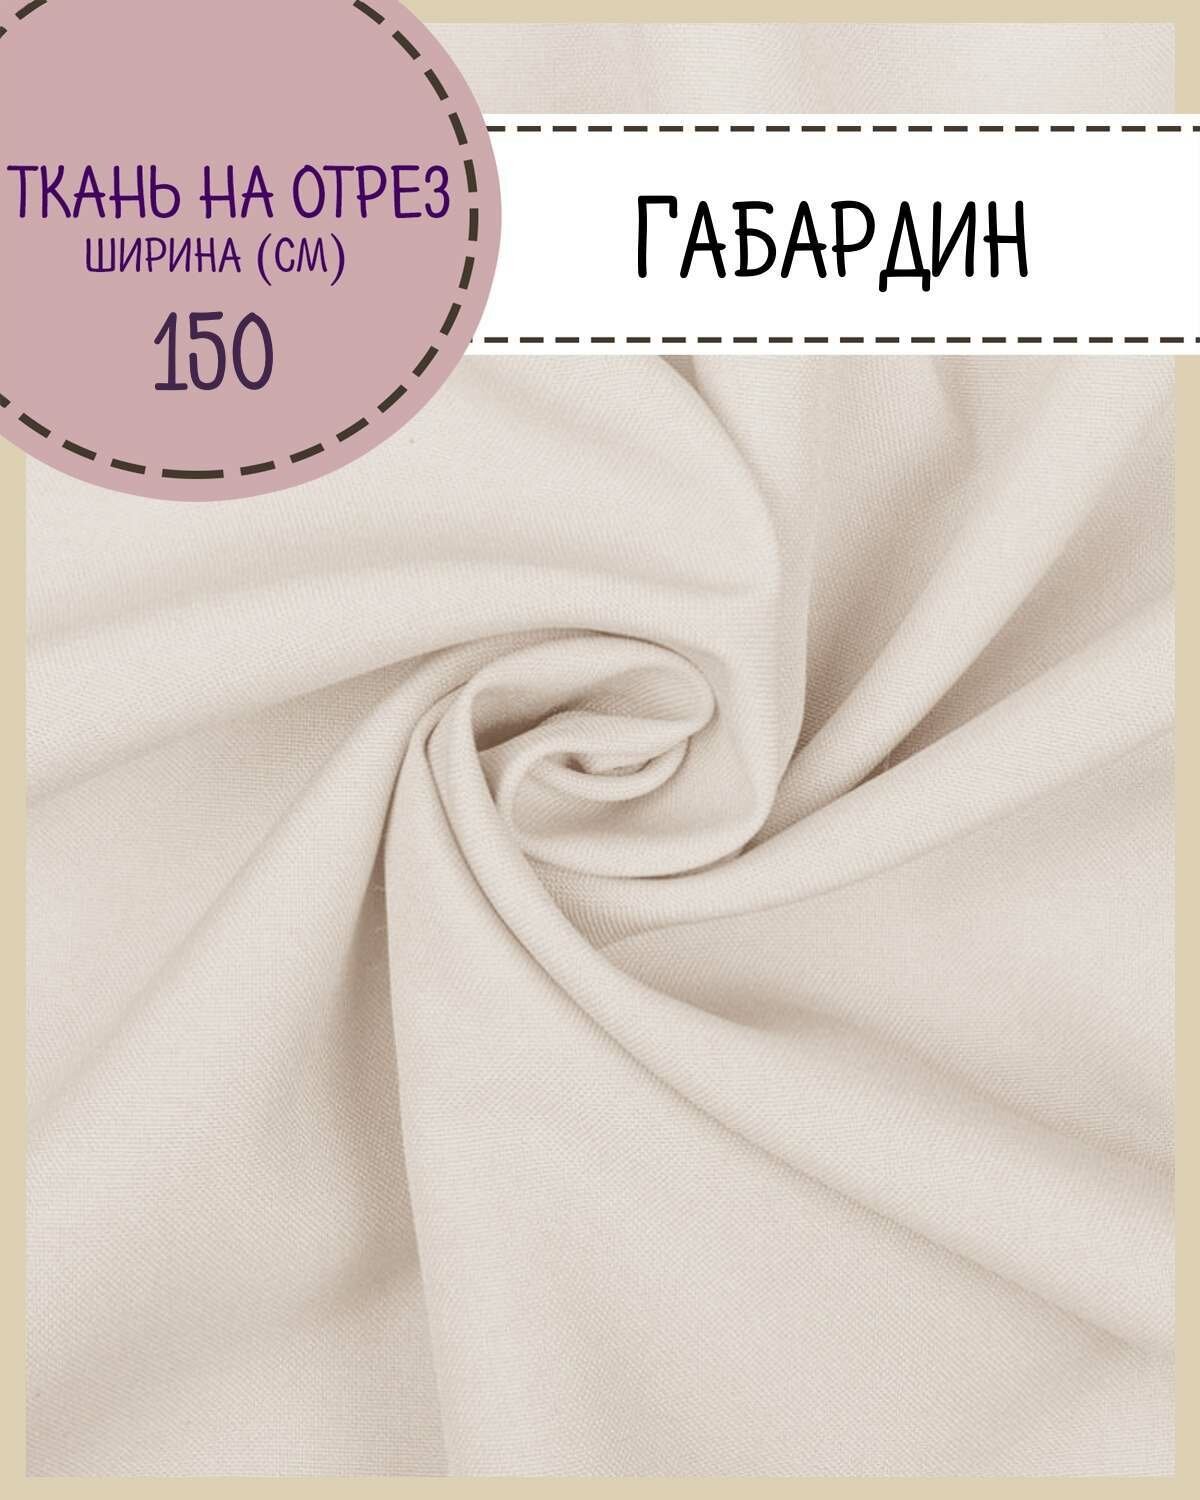 Ткань Габардин цв. бежевый пл. 160 г/м2  ш-150 см на отрез цена за пог. метр